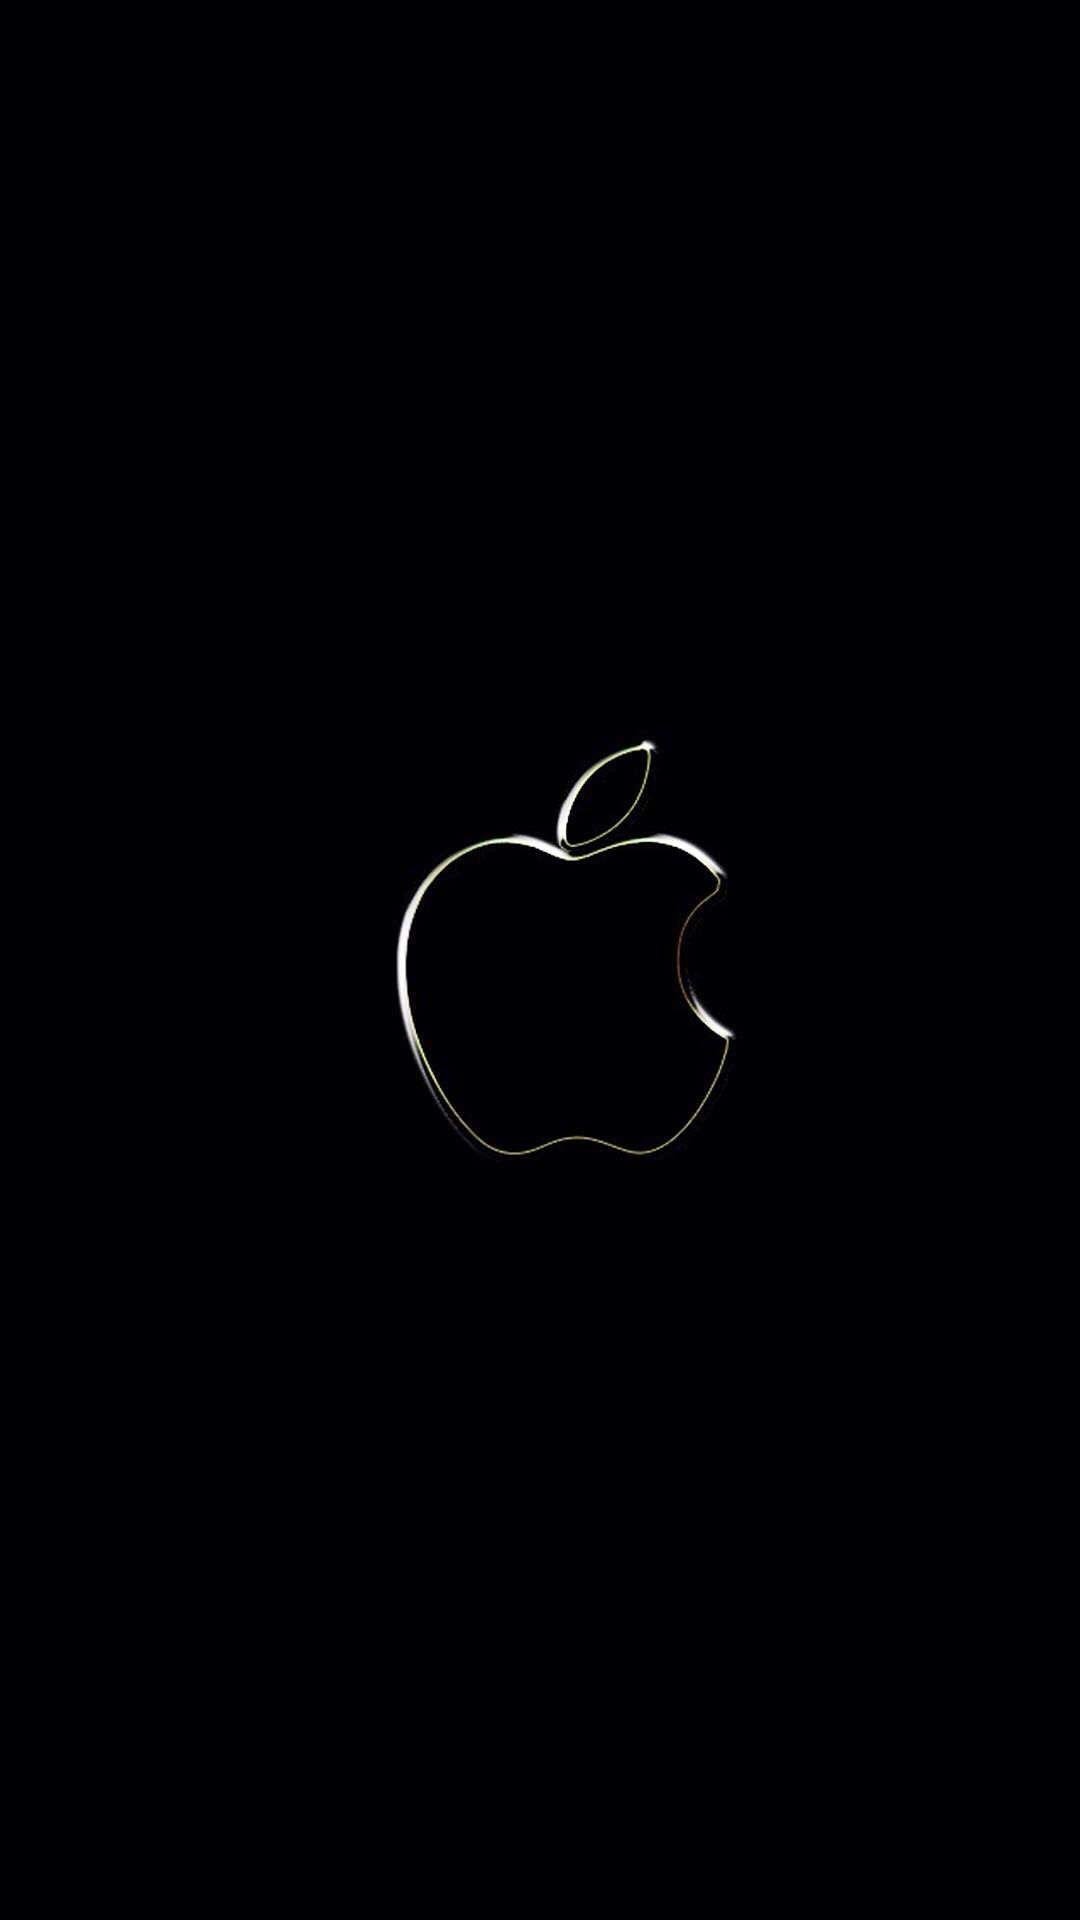 Black apple logo